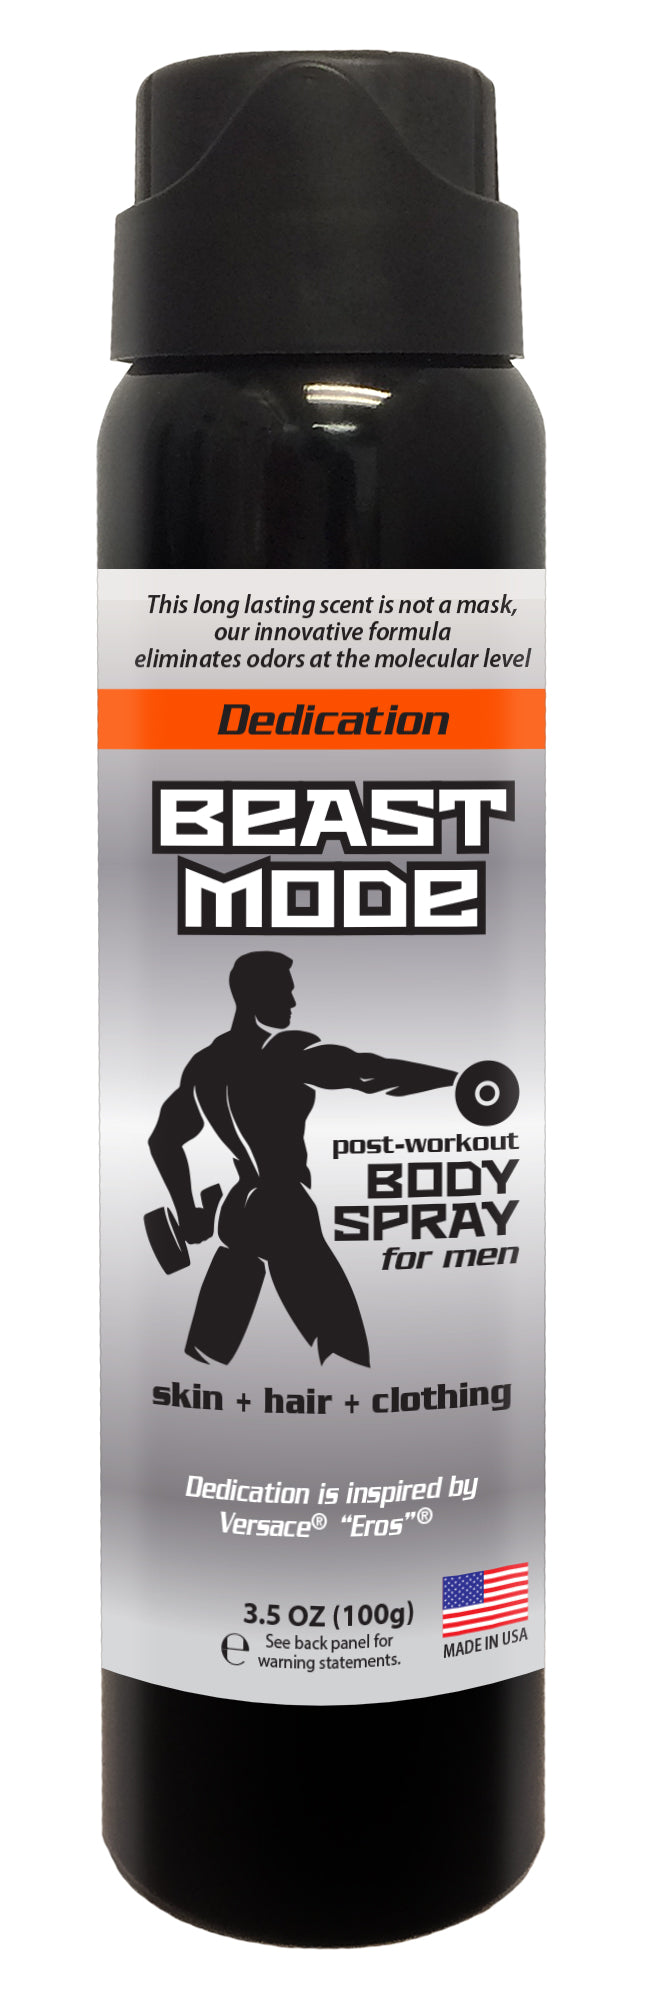 Beast Mode - Men’s Post Workout Body Spray 3.5oz (DEDICATION)